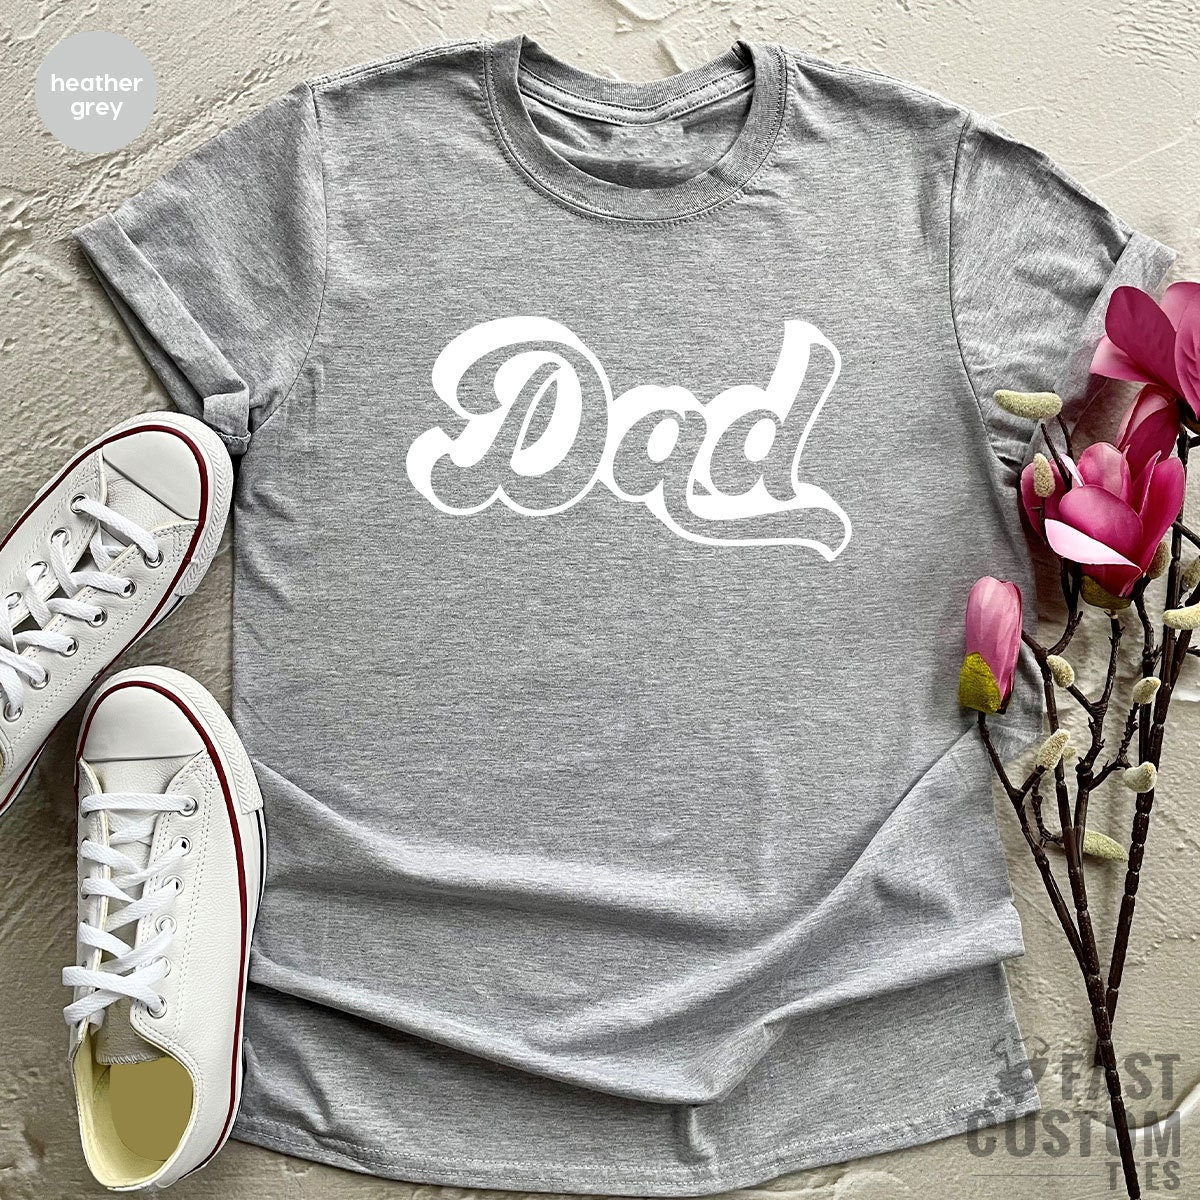 Dad TShirt, Cool Dad Shirt, Retro Dad Shirt, Father's Day Shirt, Dad Gift, Dad Birthday Gift, Daddy Shirt, Dad Shirt, New Dad Shirt, Dad Tee - Fastdeliverytees.com